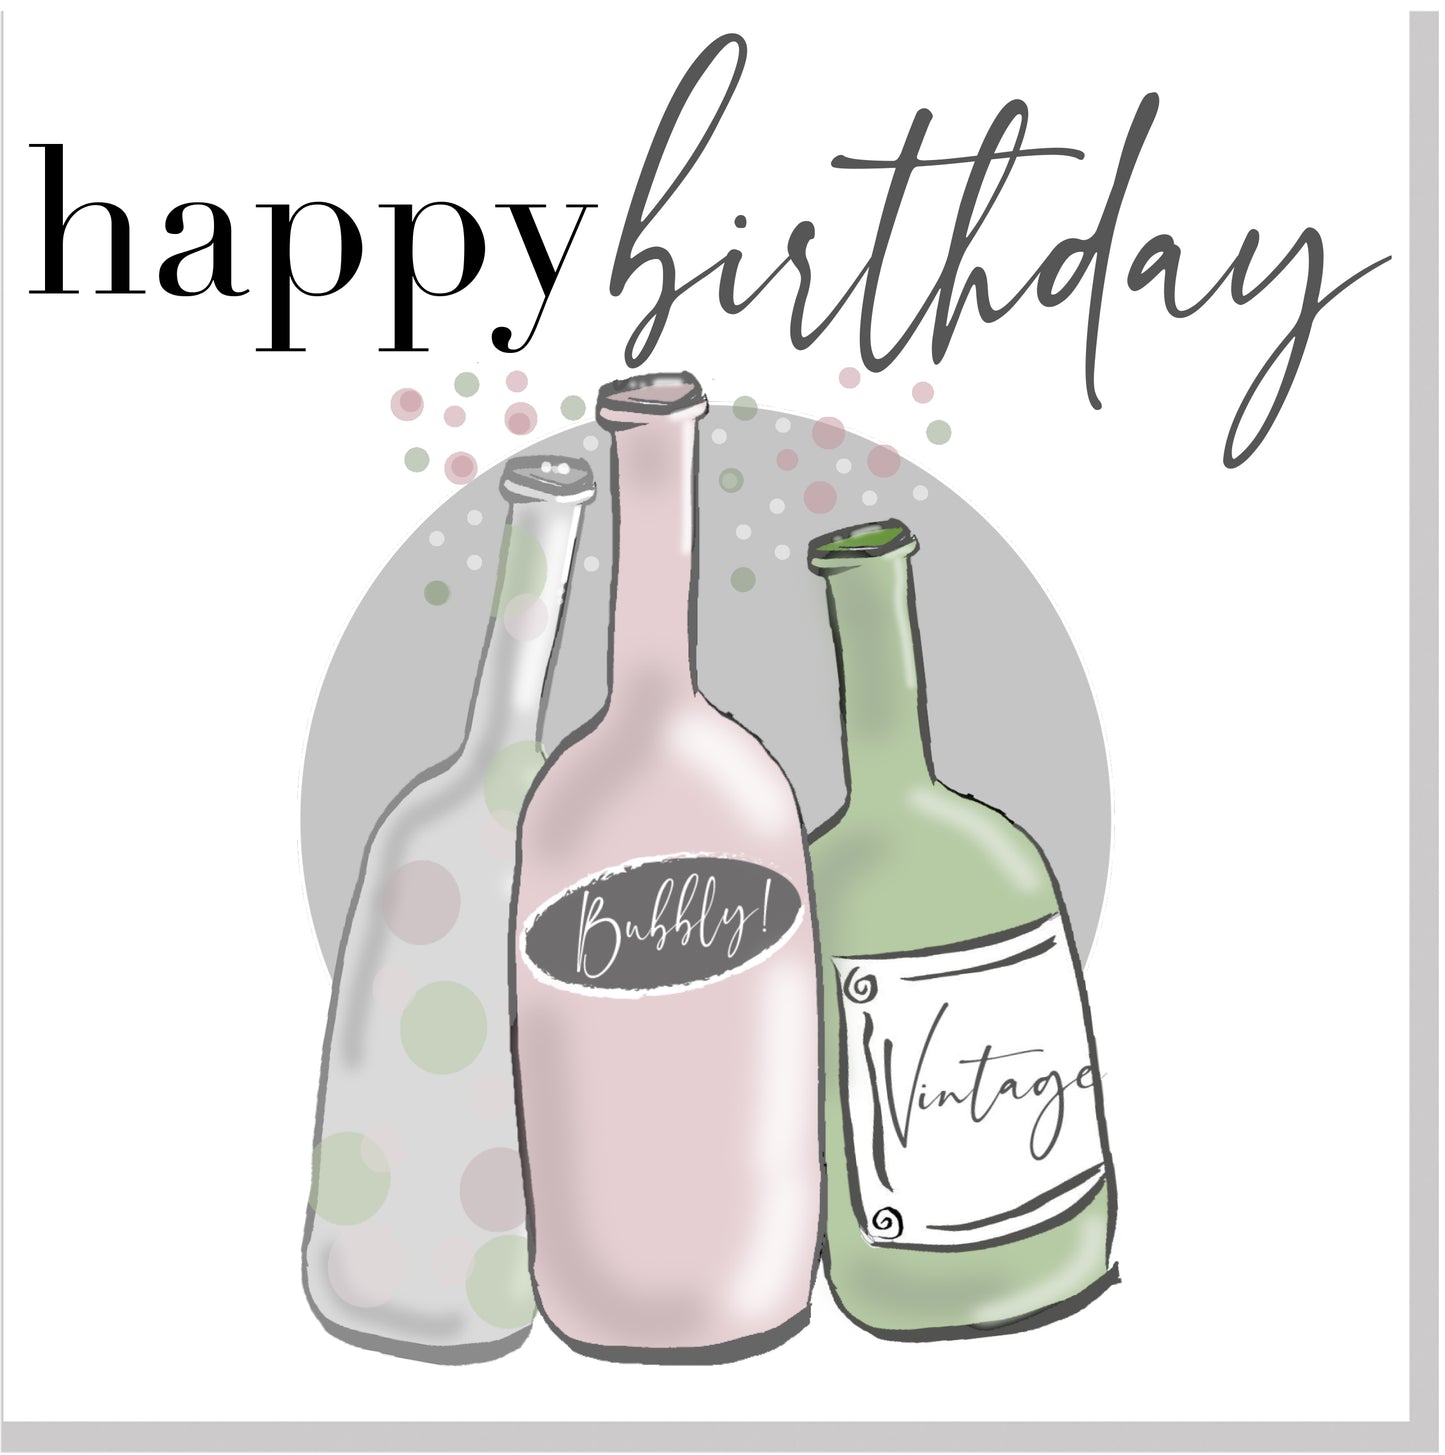 Happy Birthday Bubbly Bottles square card